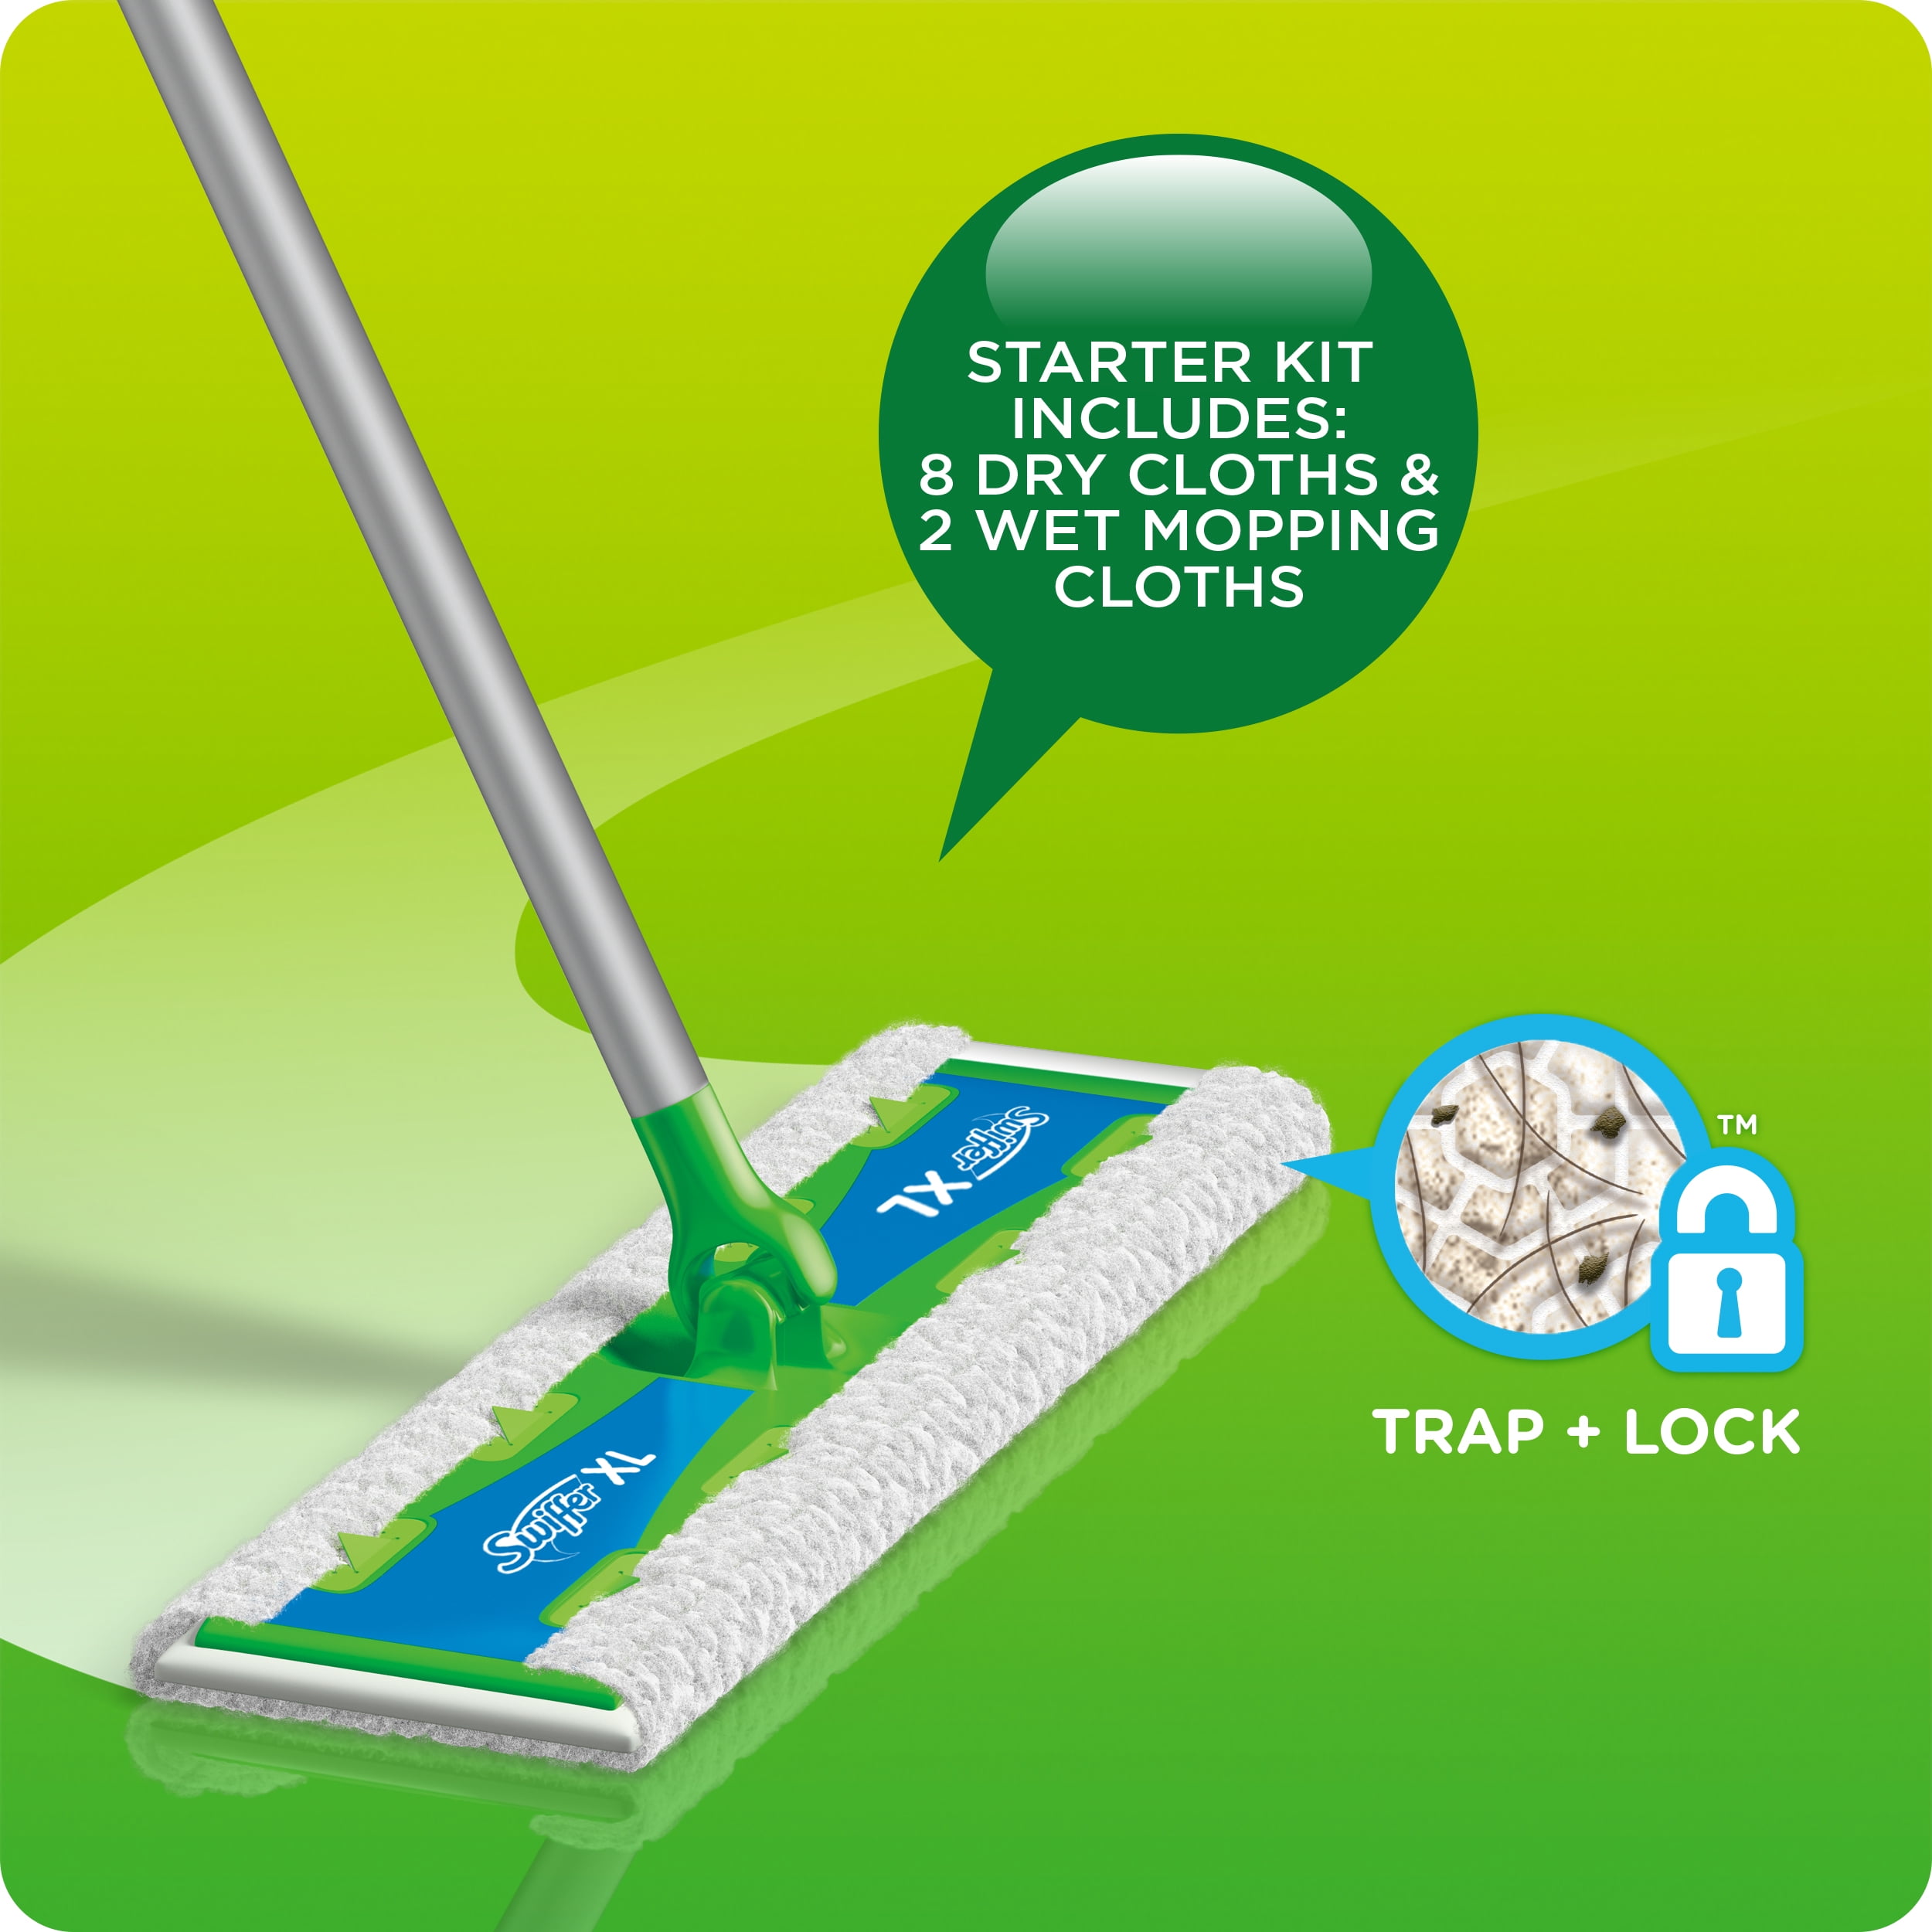 Swiffer Sweeper Original Dry & Wet Mop Starter Kit